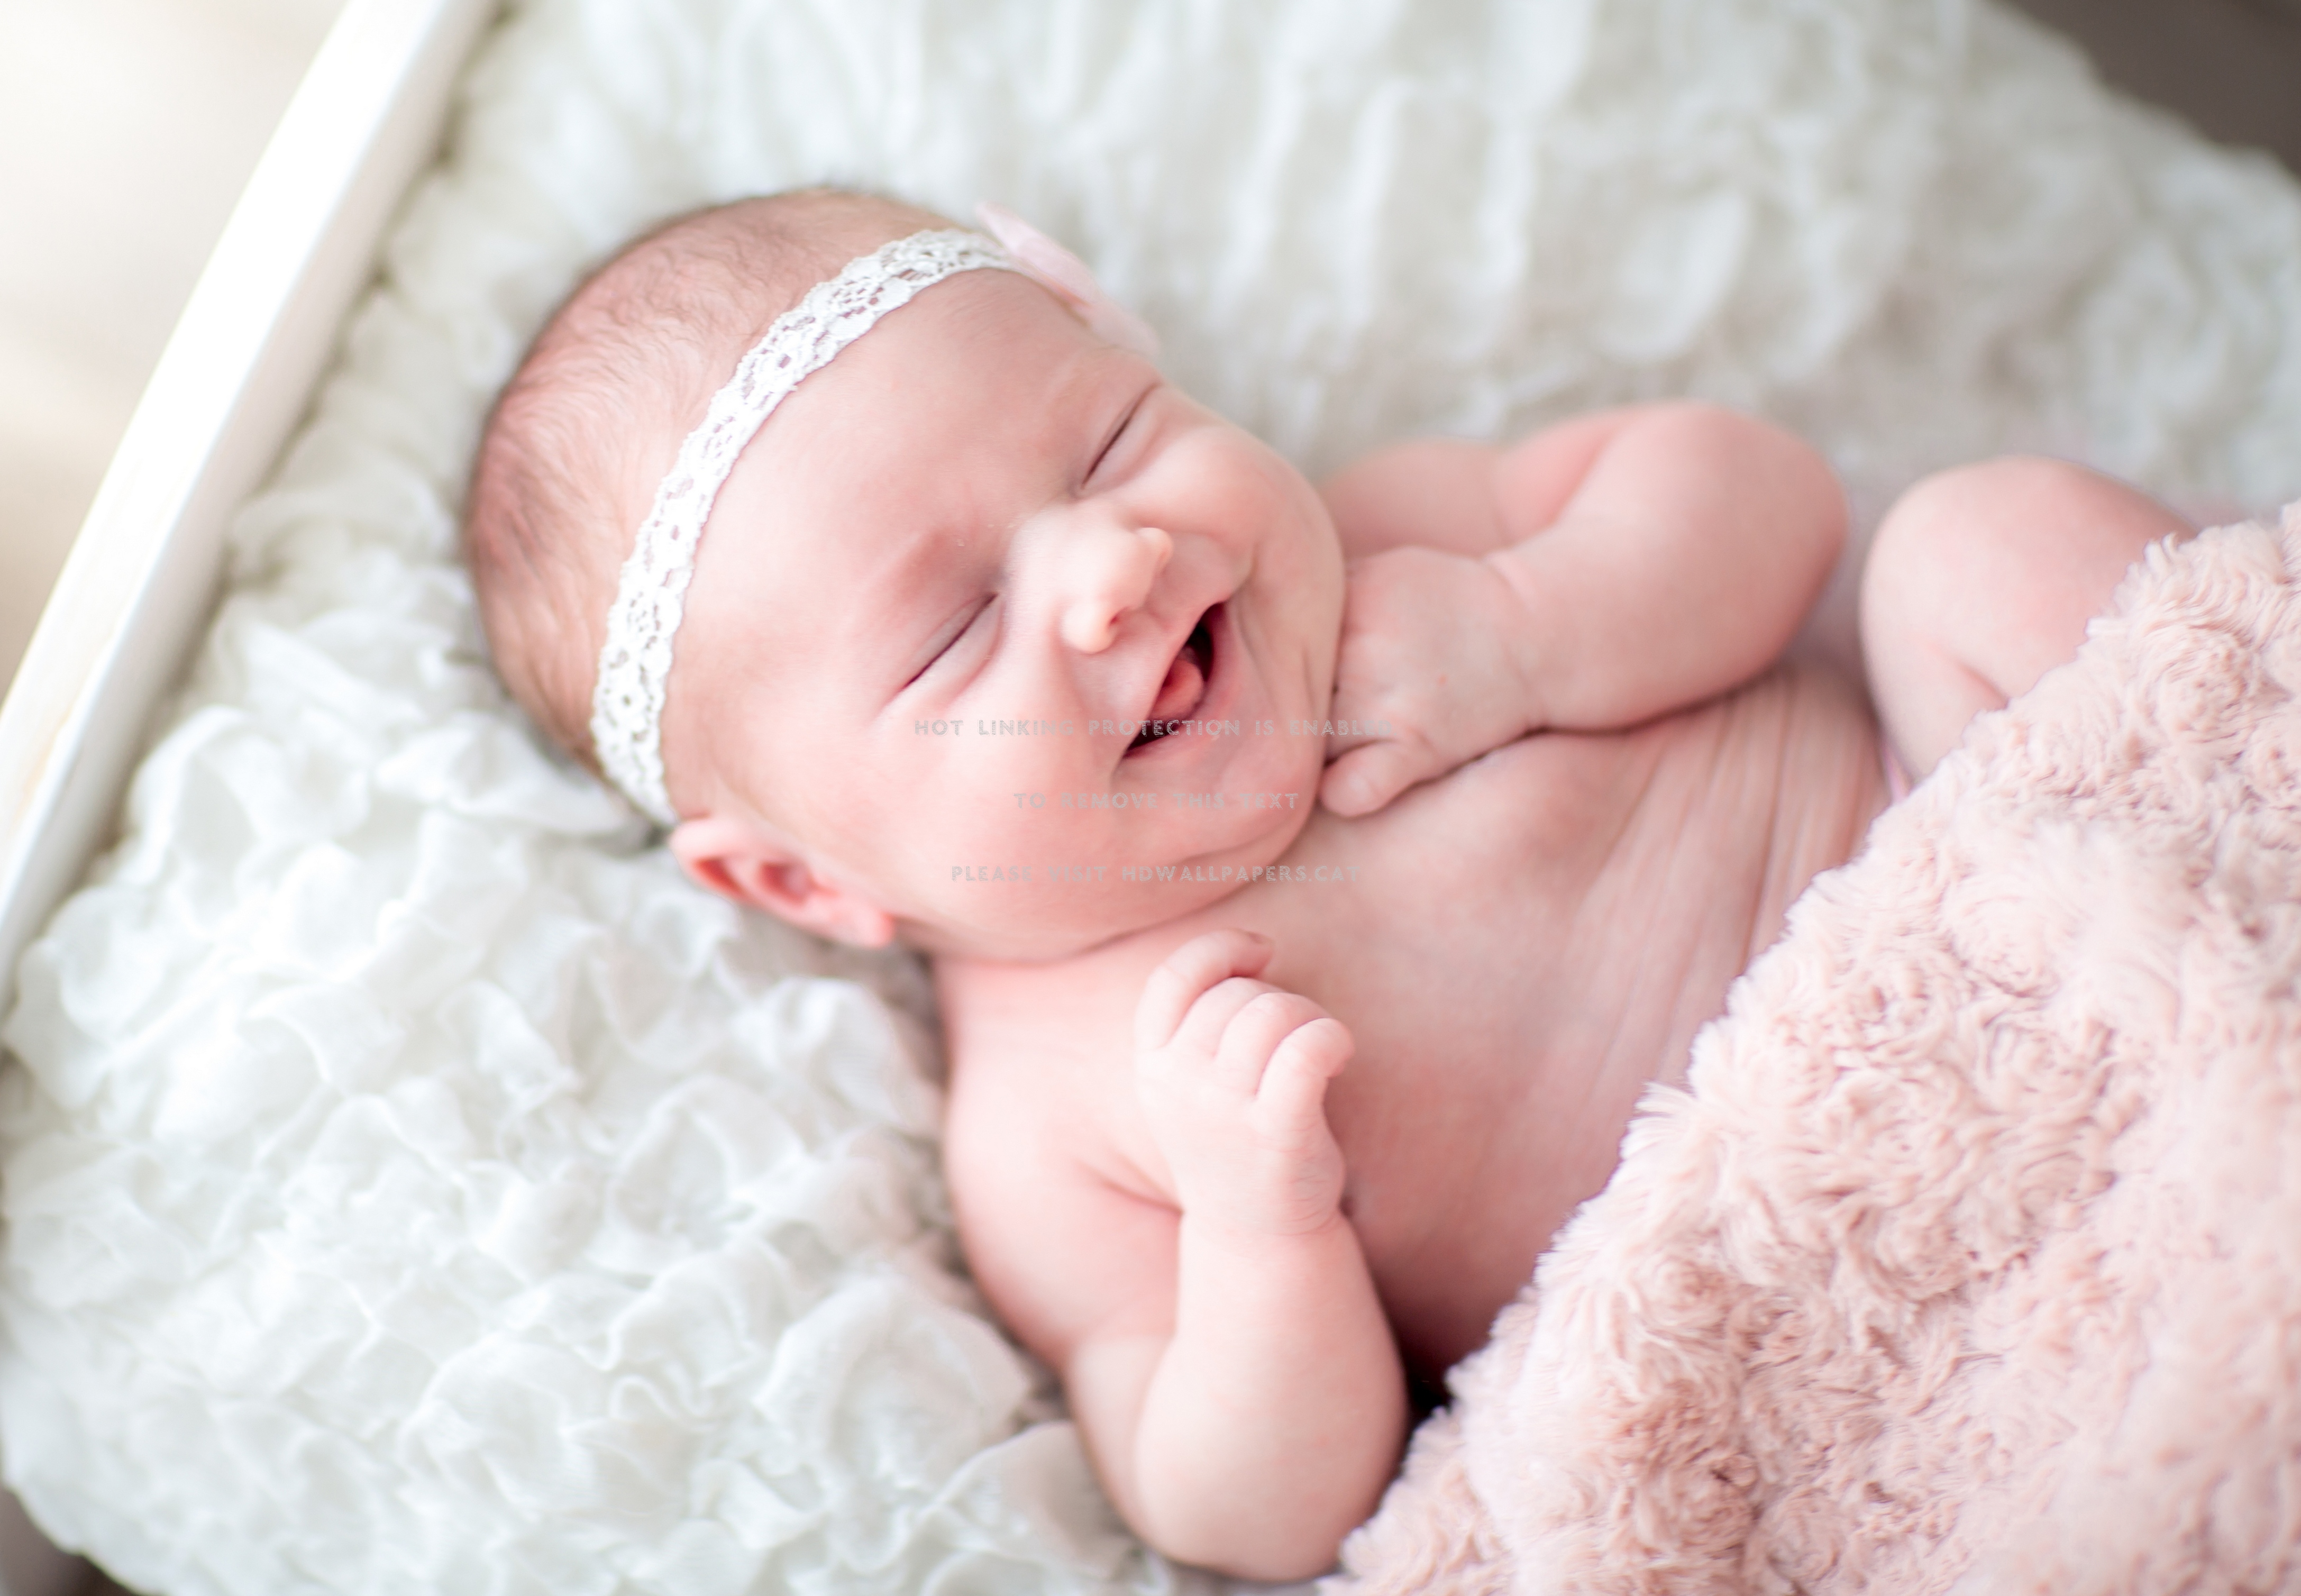 Newborn Child Baby Babies Love Sweet Cute - Smiling New Born Baby -  4350x3017 Wallpaper 